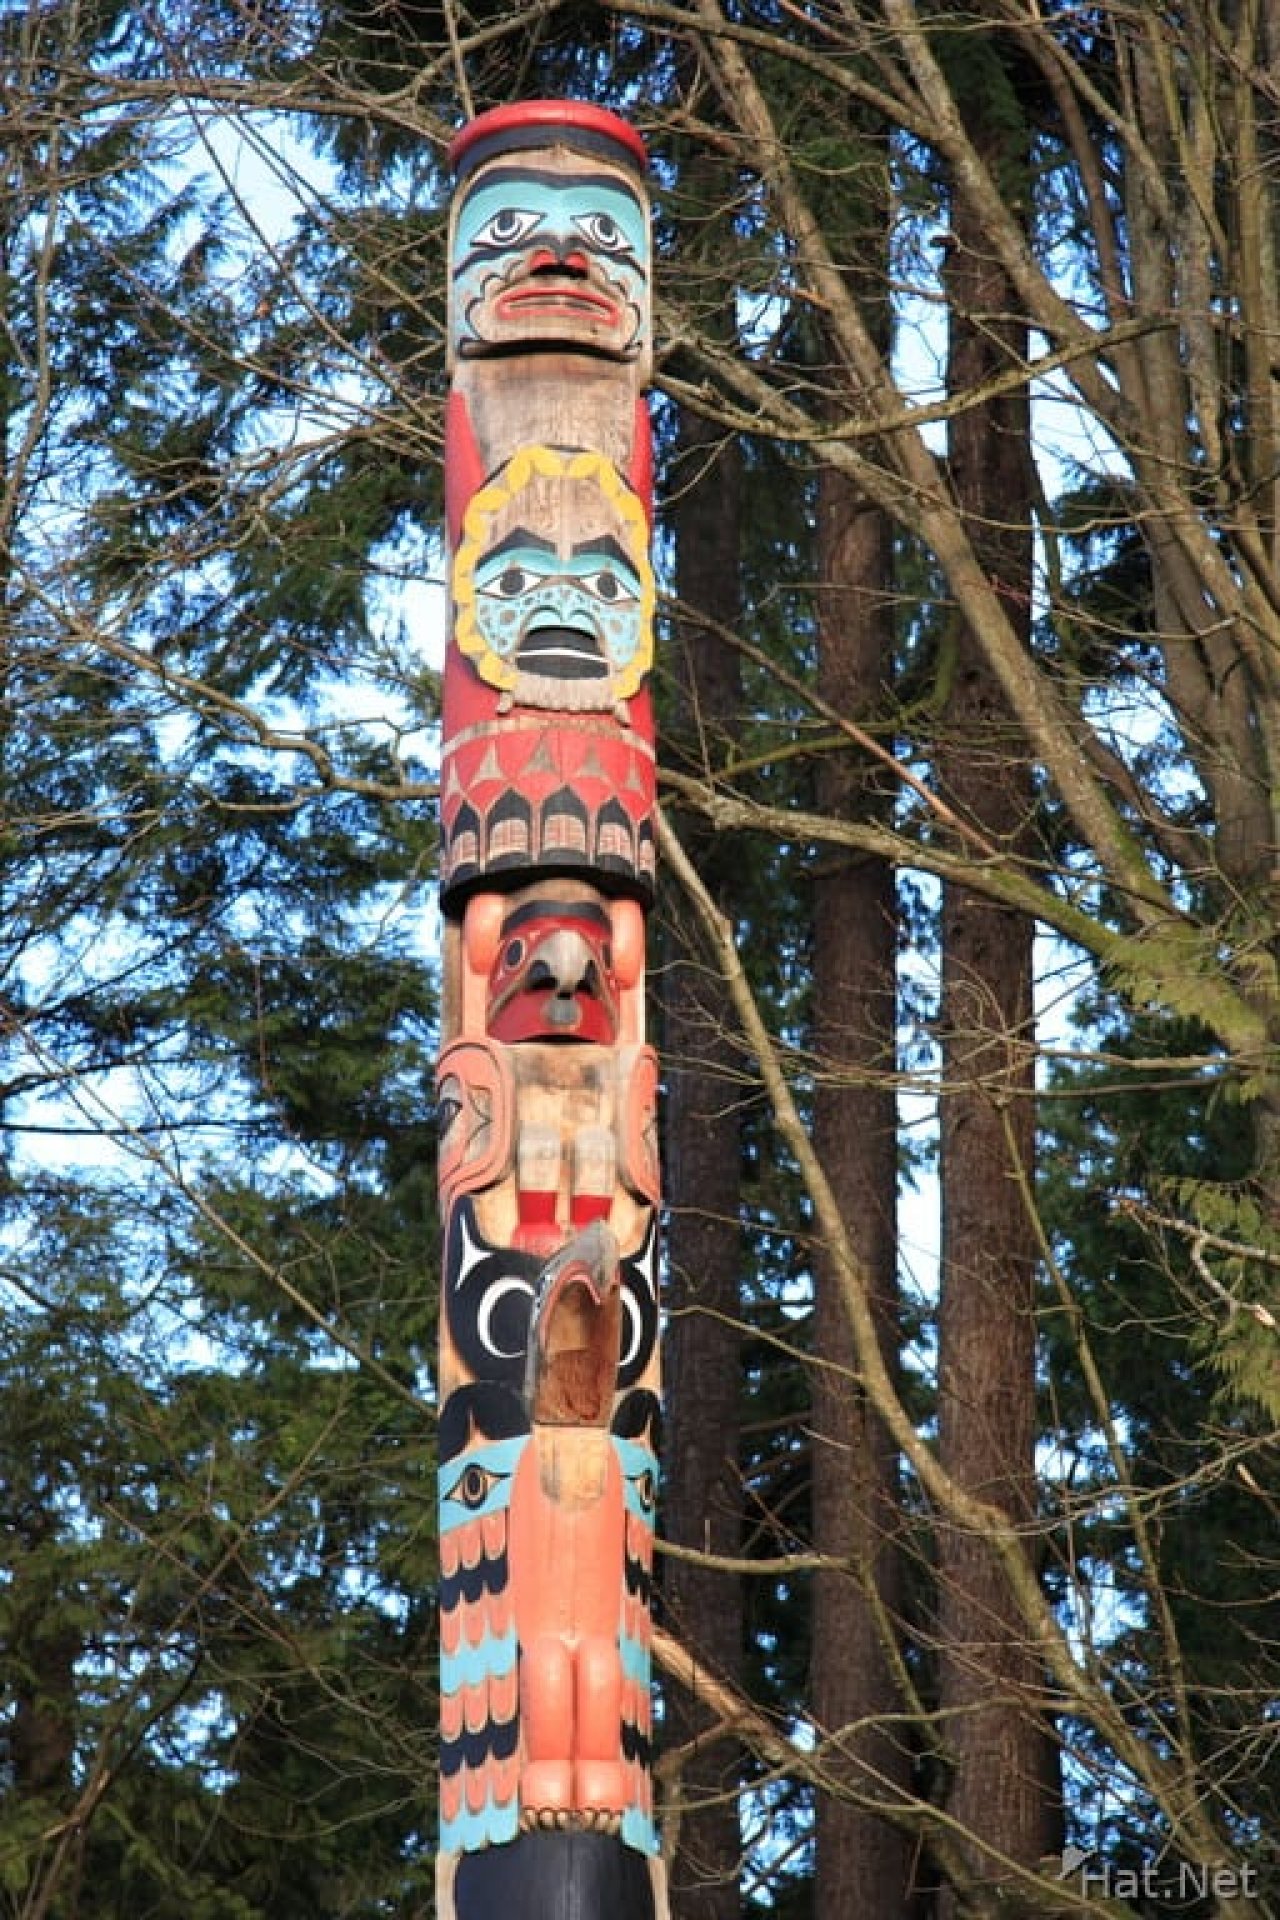 Sky Chief Totem Pole
Source: http://stanleyparkvan.com/stanley-park-van-attractions-totem-poles.html